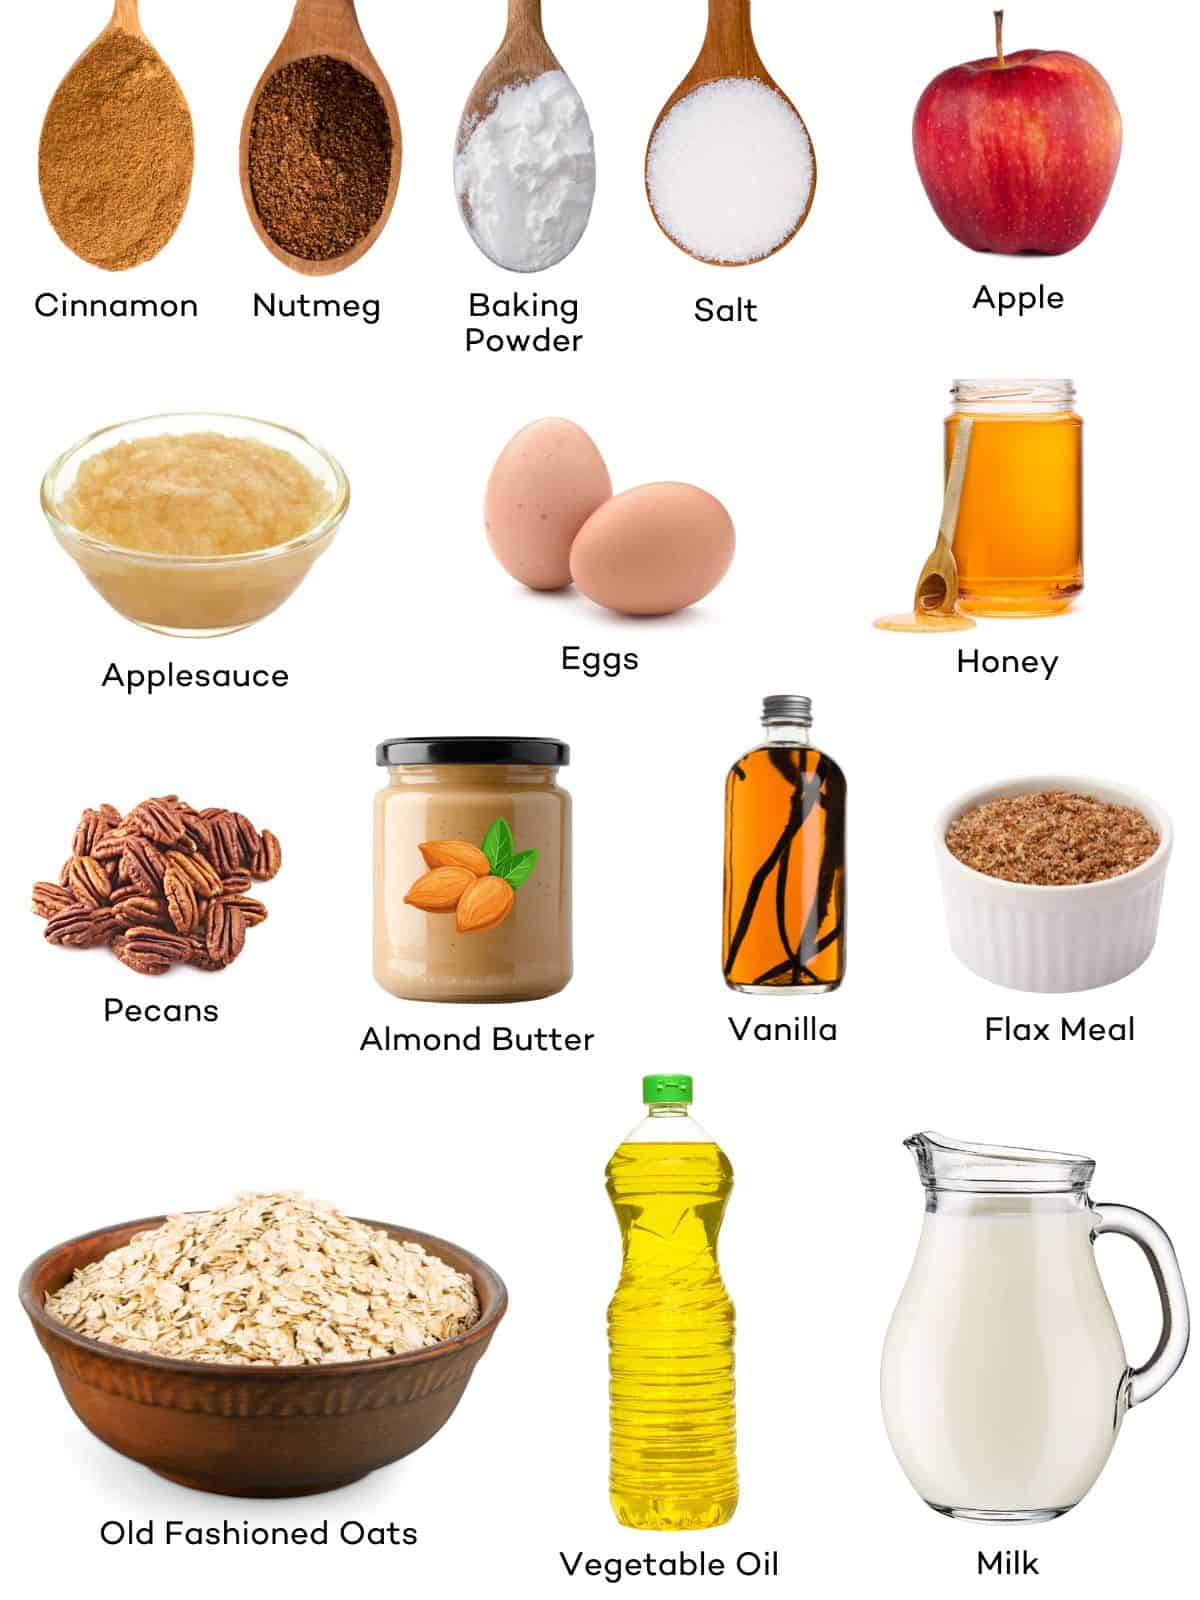 Ingredients for apple cinnamon baked oatmeal: old fashioned oats, vegetable oil, milk, flax meal, vanilla, almond butter, pecans, eggs, apple, honey, apple sauce, salt, baking powder, nutmeg, cinnamon. 